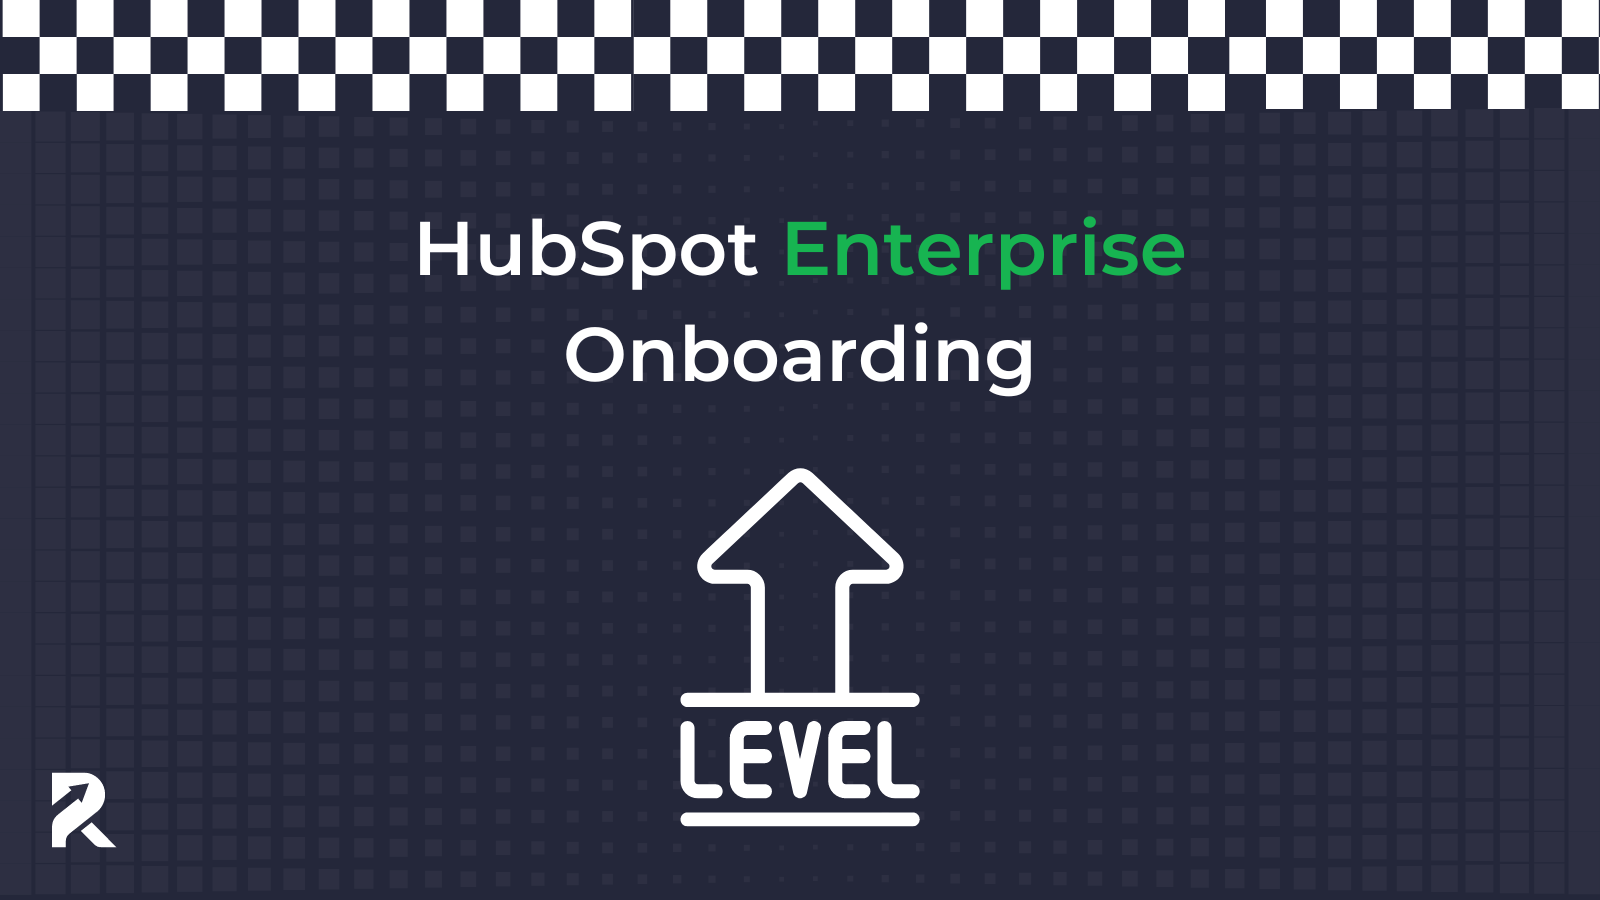 HubSpot Enterprise Onboarding